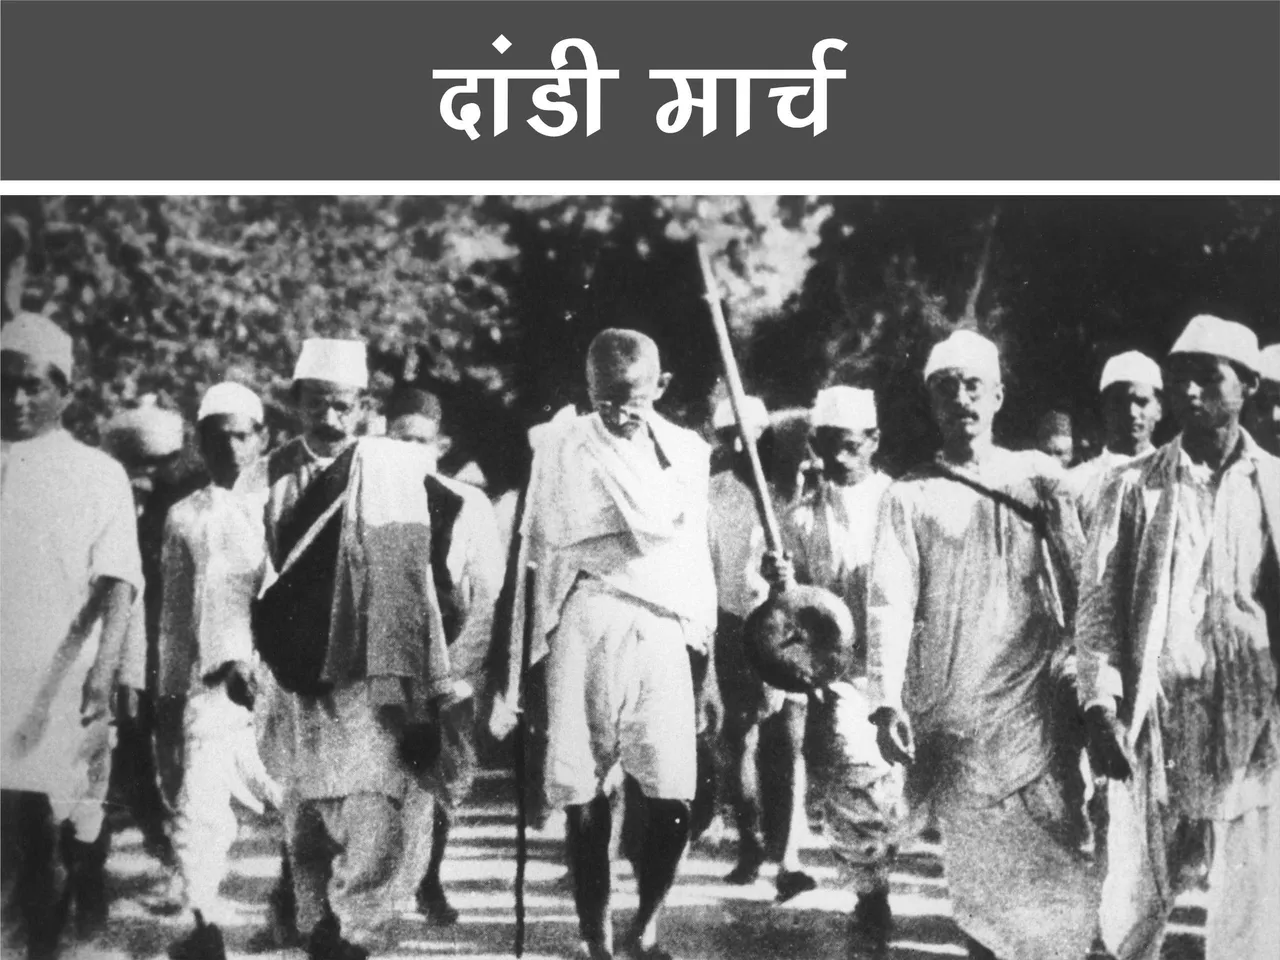 Gandhiji in dandi march